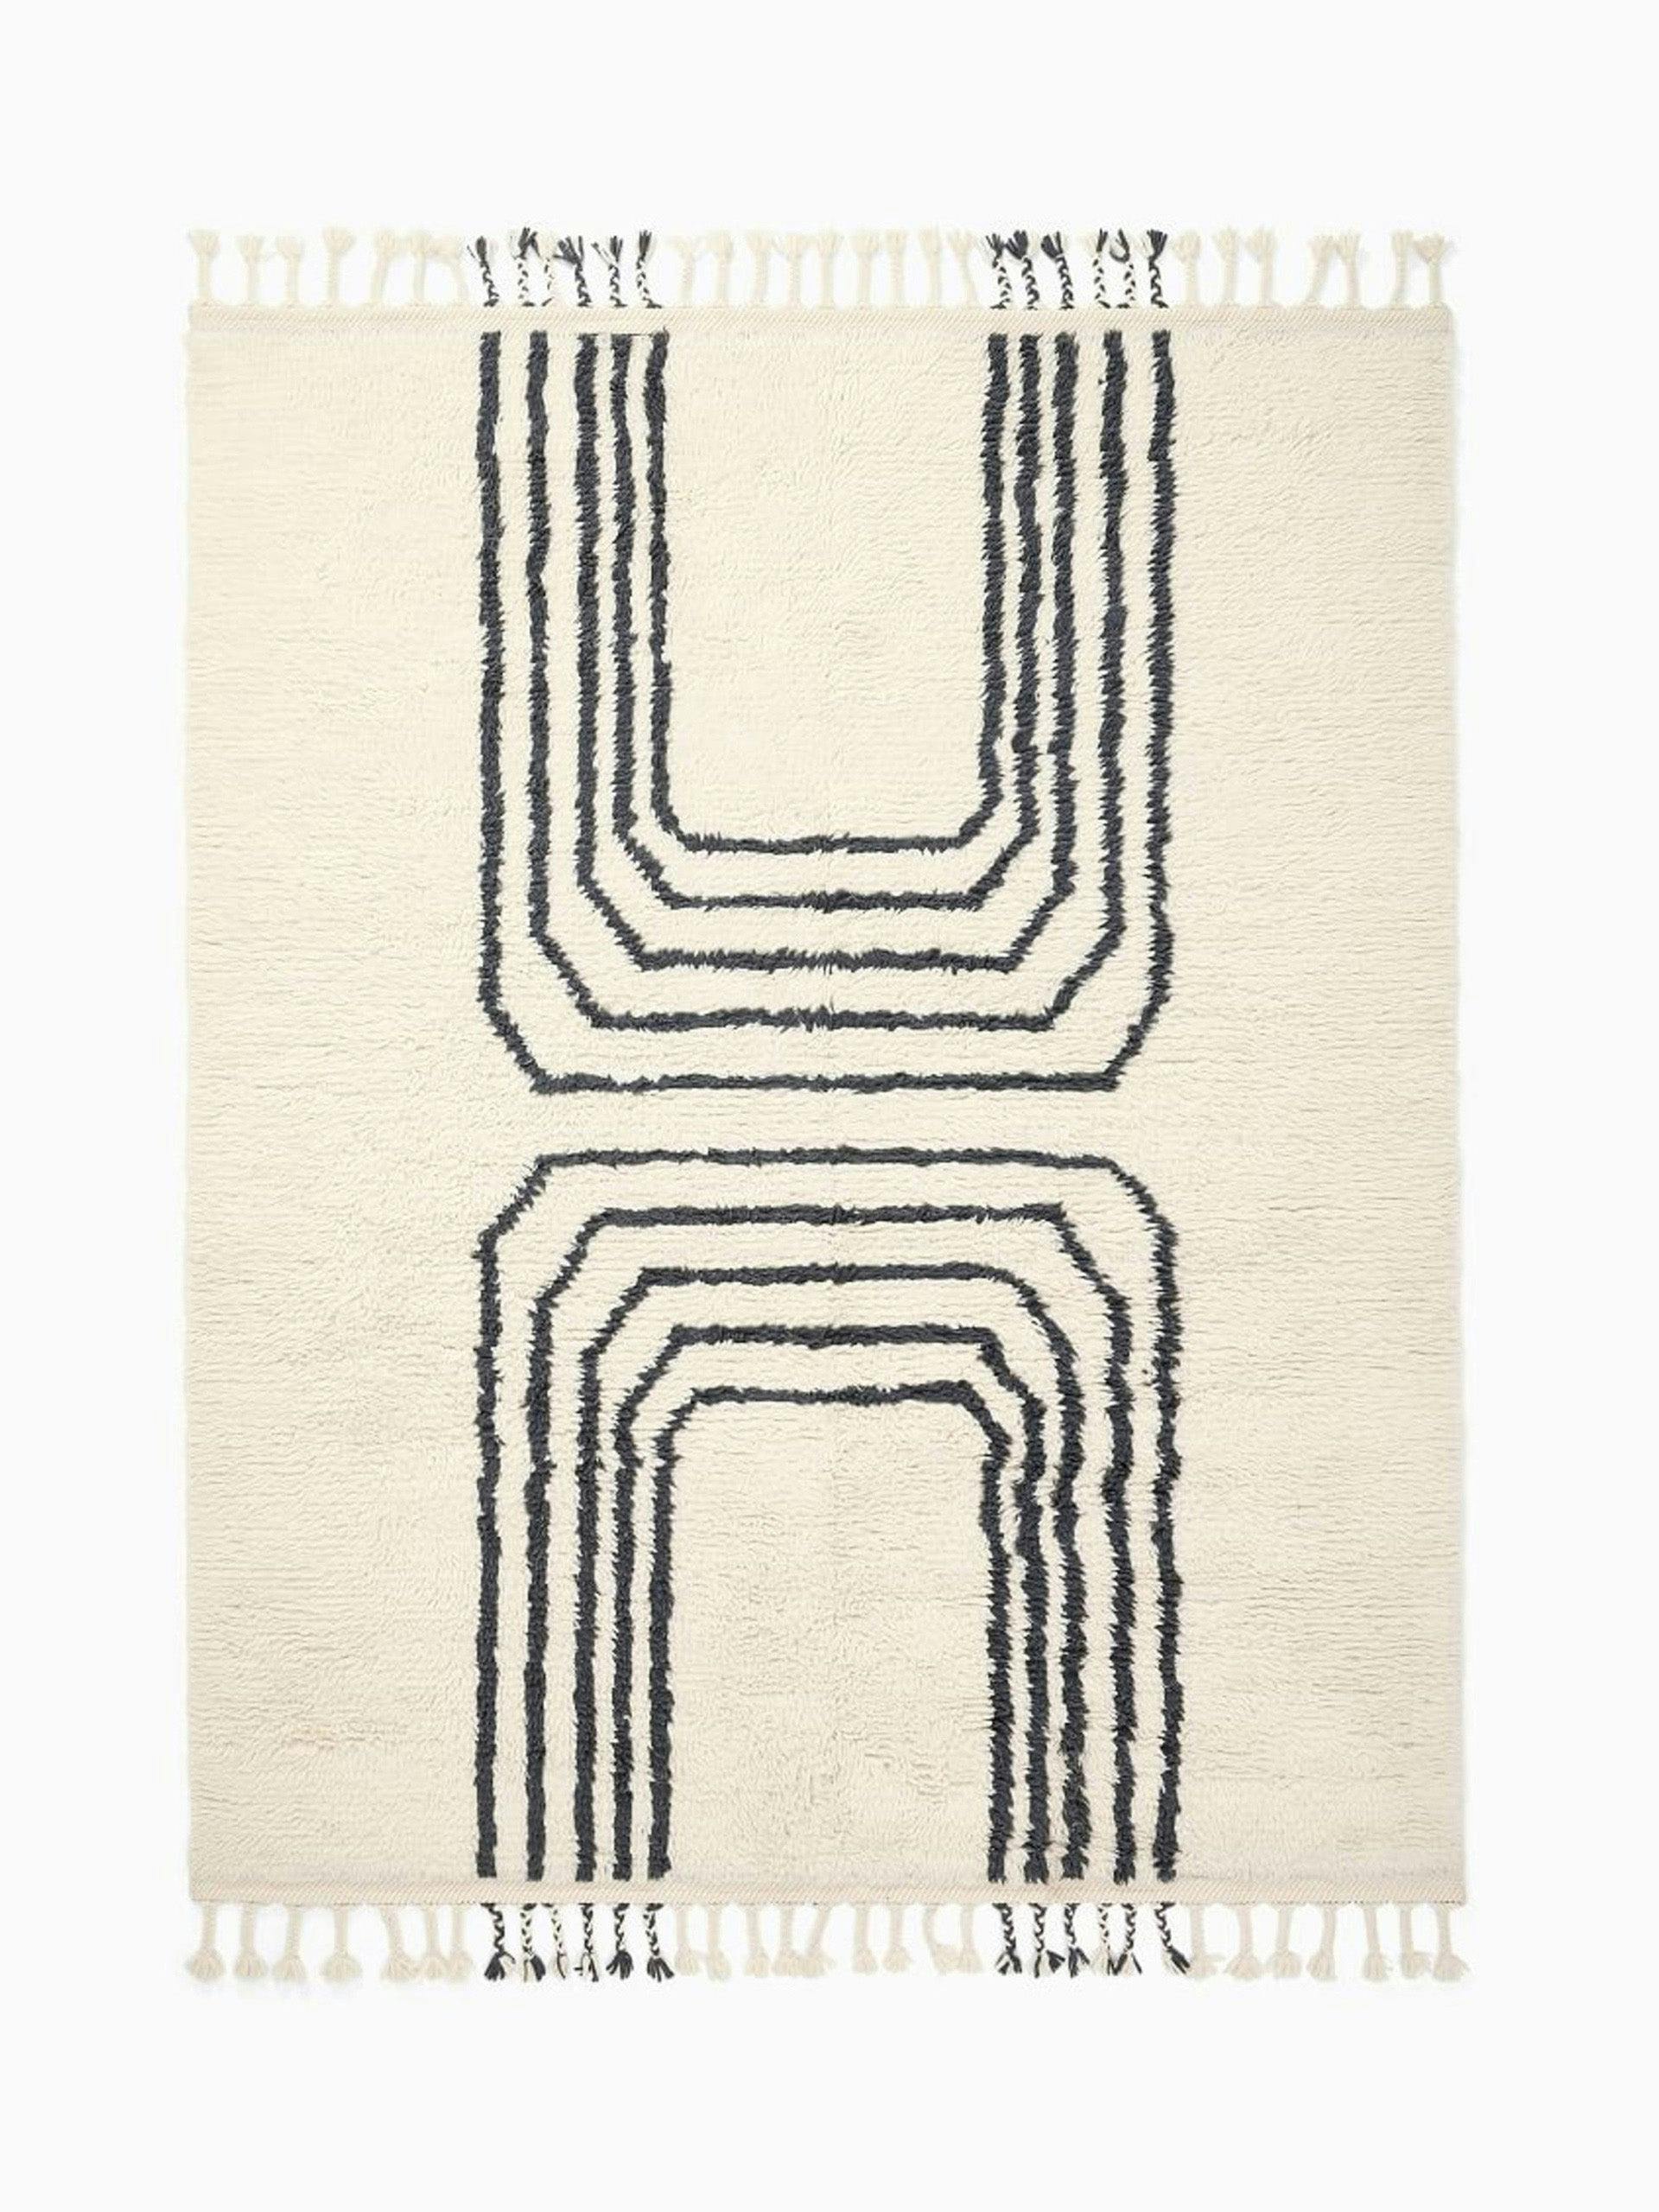 Arches handwoven shag rug